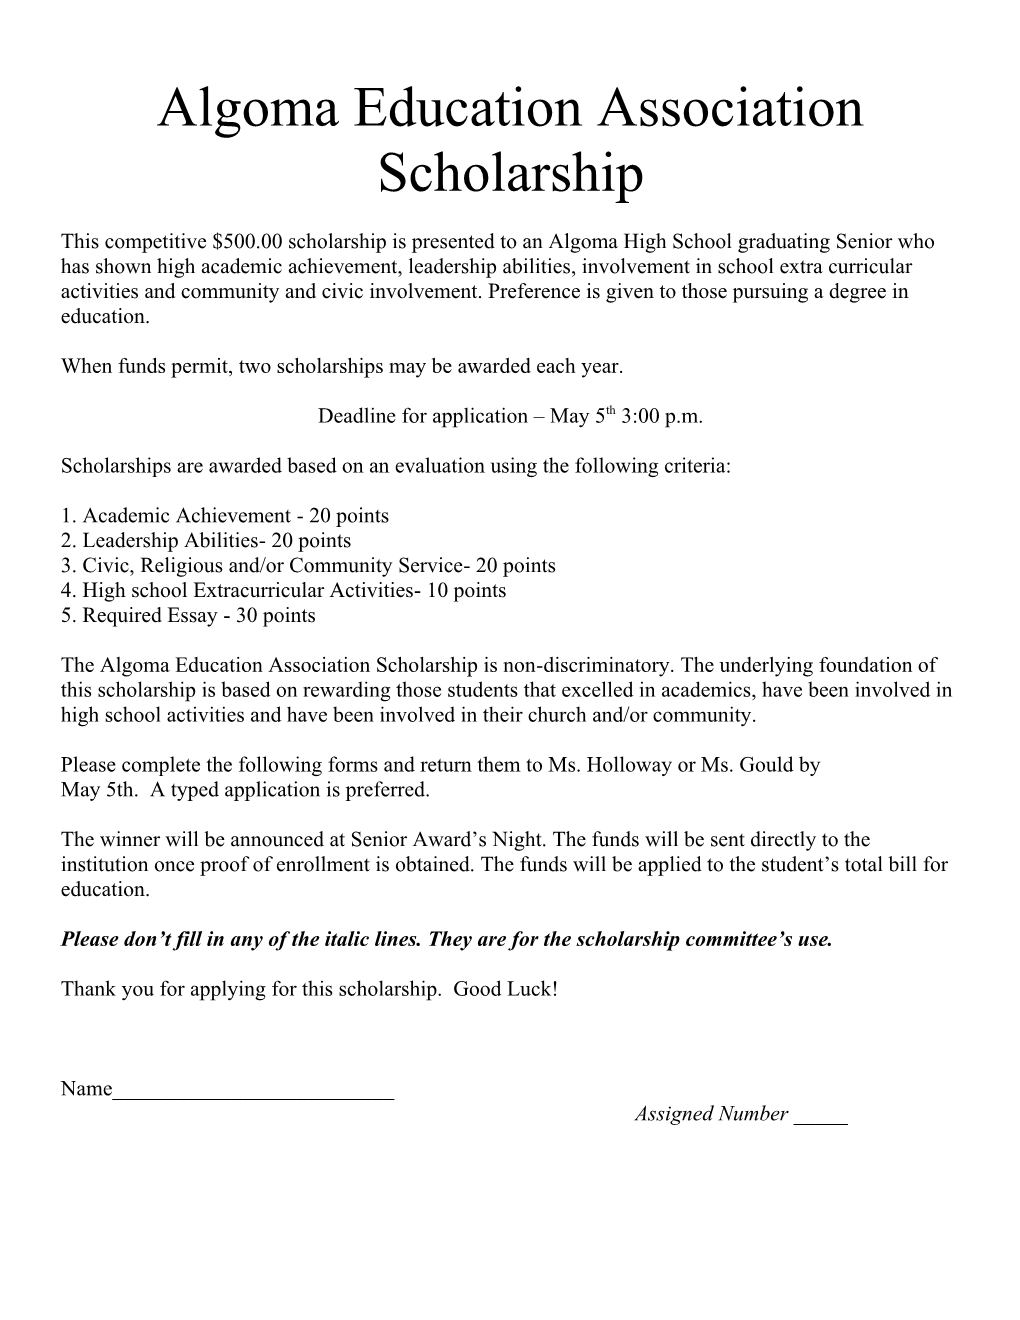 Algoma Education Association Scholarship